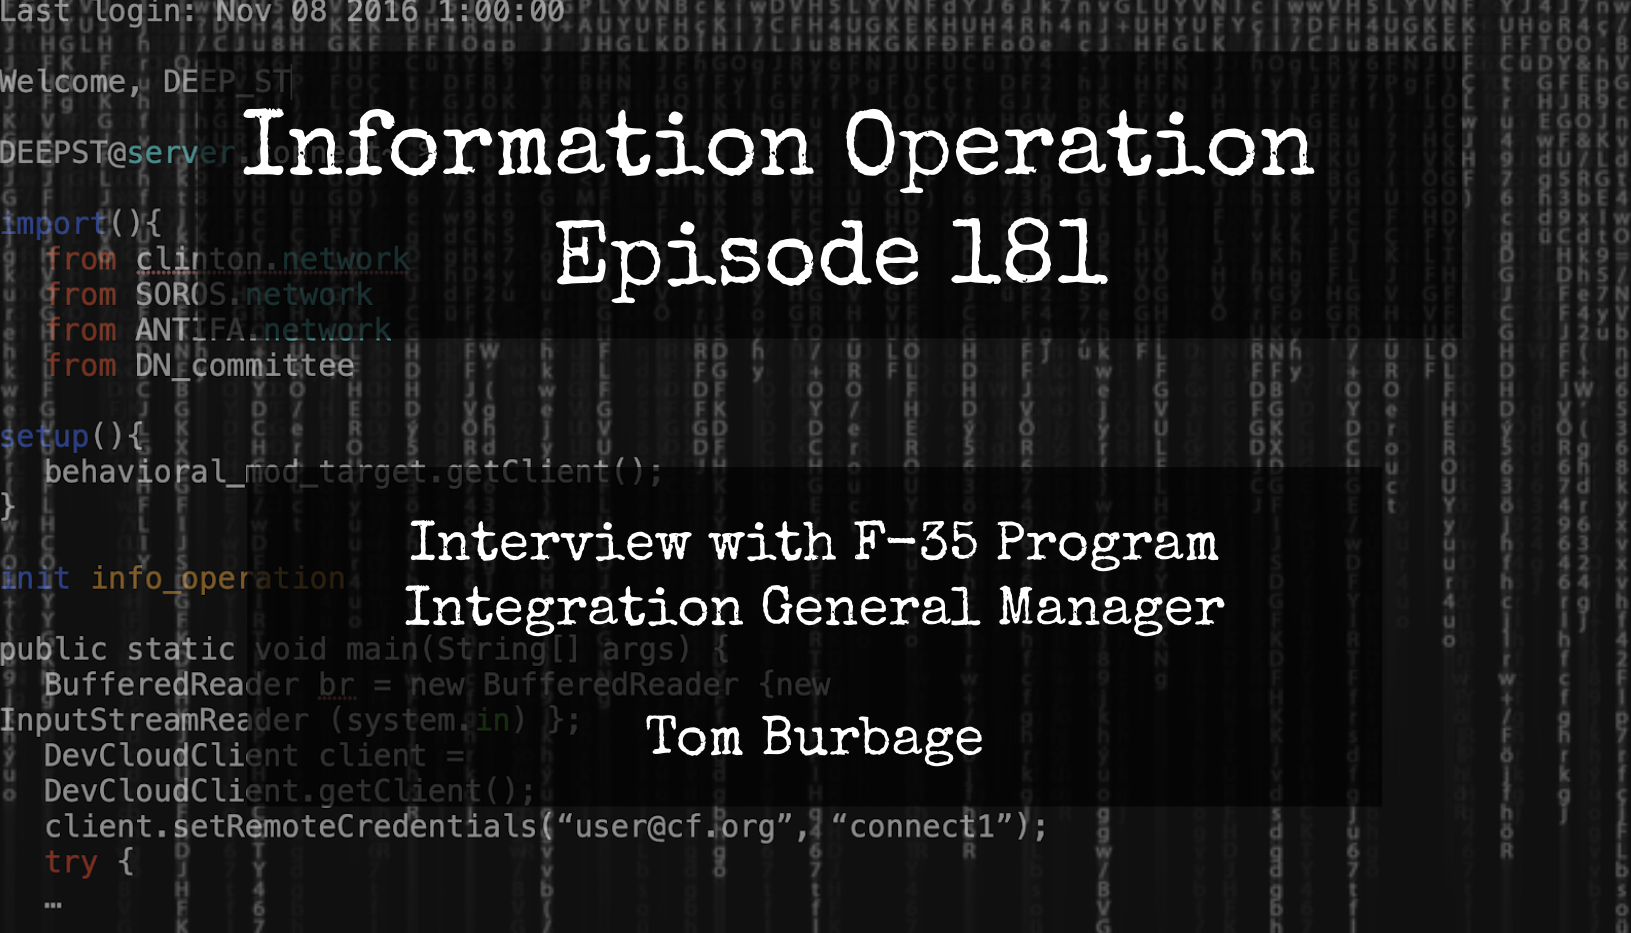 LIVESTREAM 7pm EST: Information Operation - The F-35 Development With Program General Manager Tom Burbage